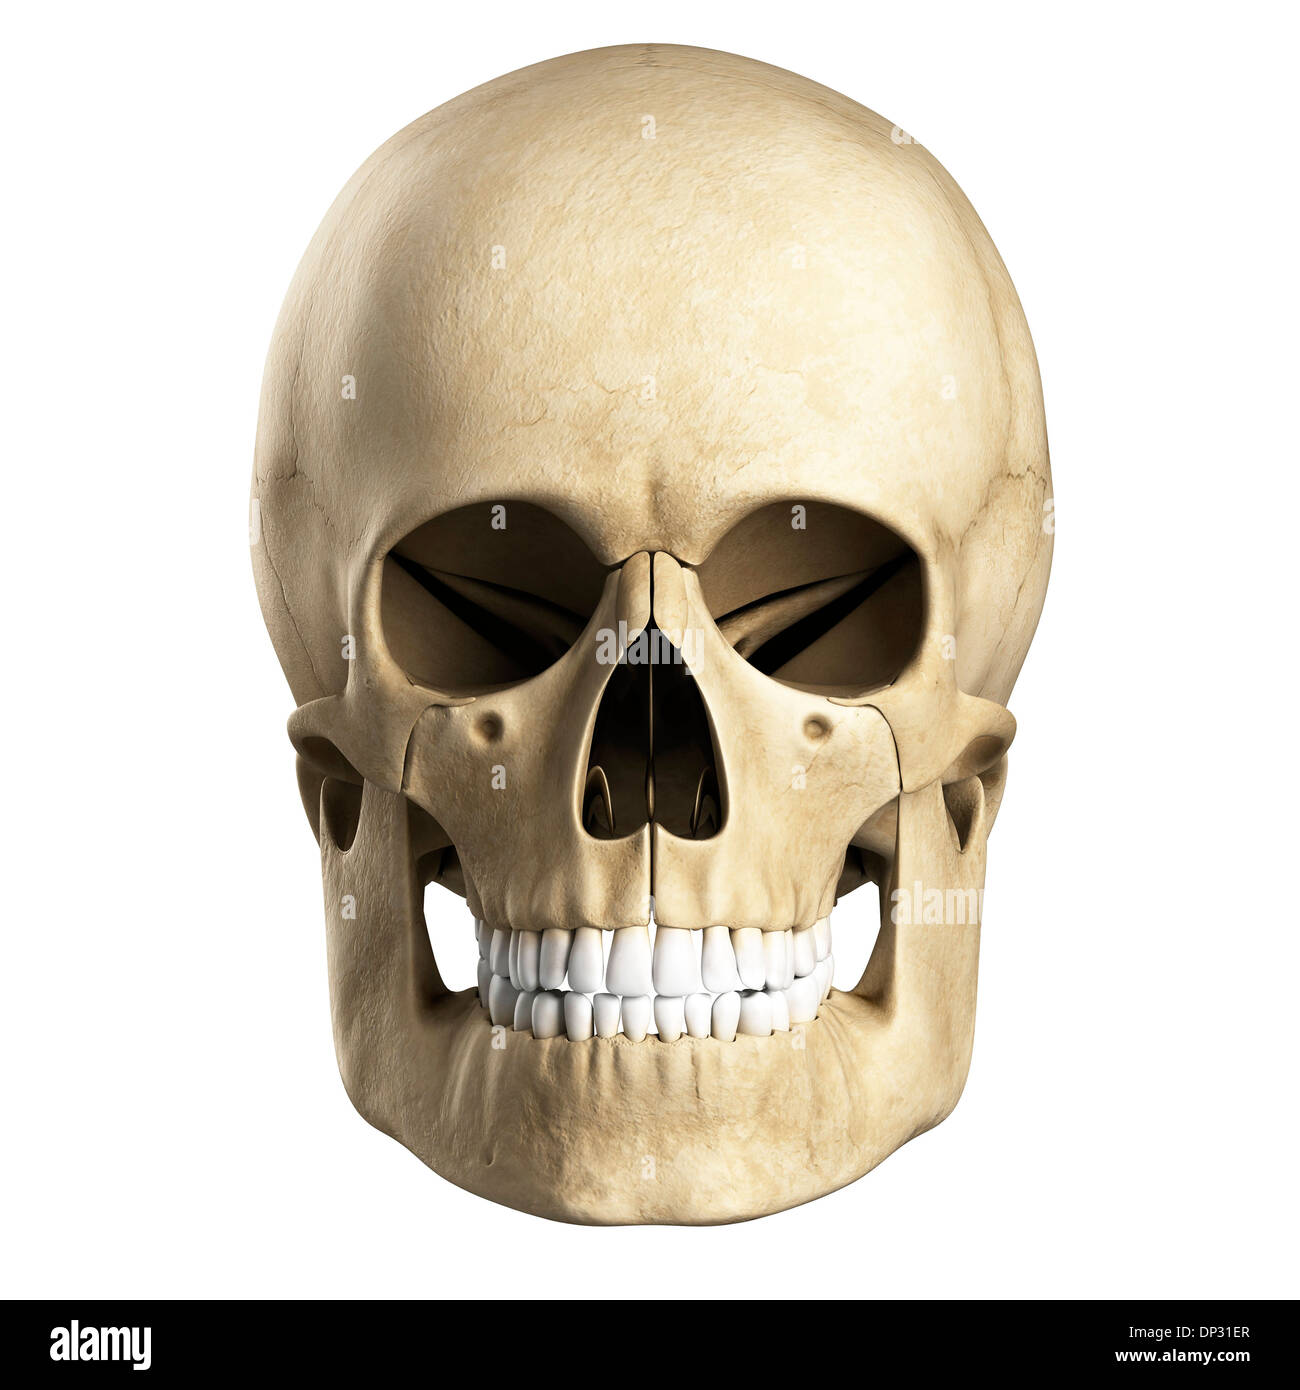 Human skull, artwork Stock Photo